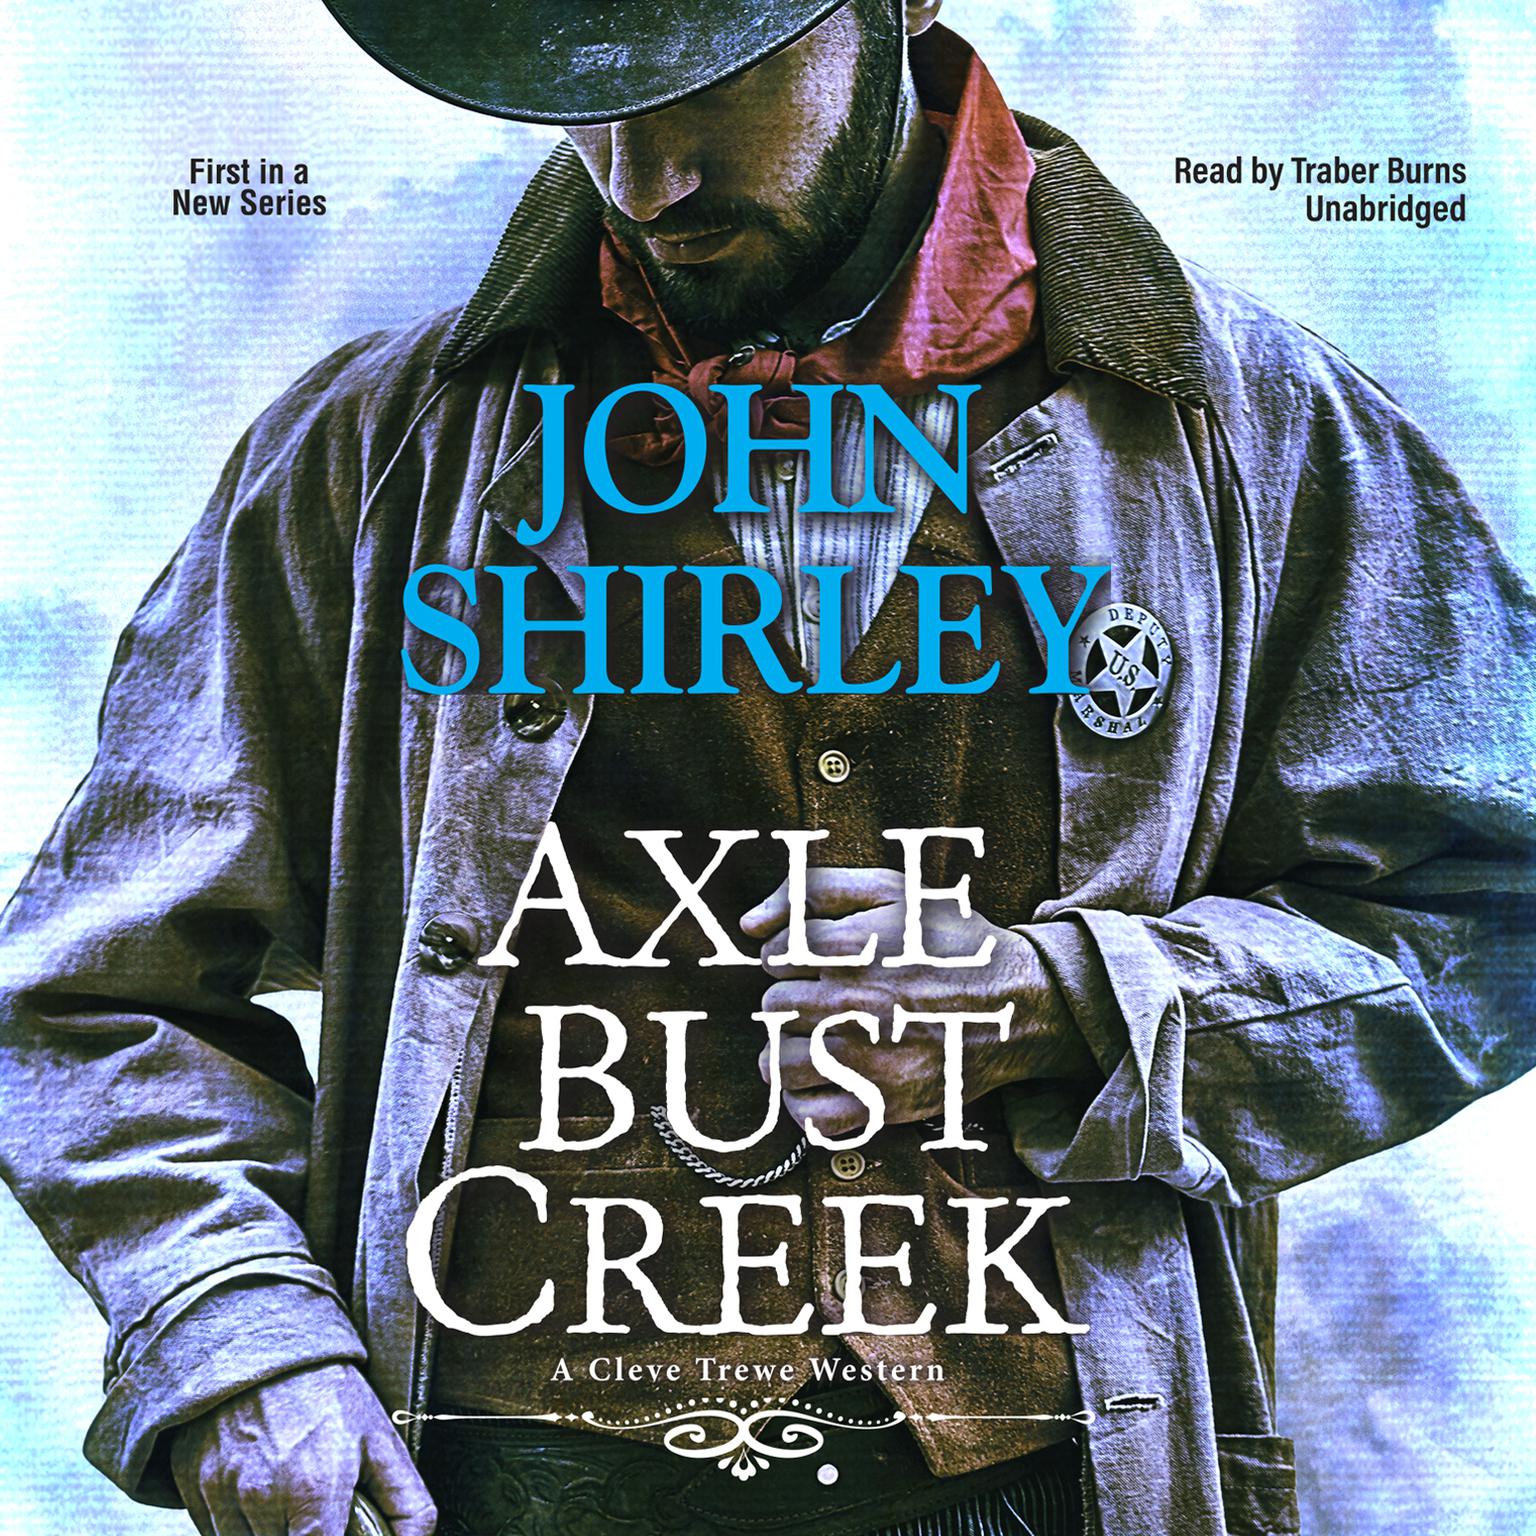 Axle Bust Creek Audiobook, by John Shirley